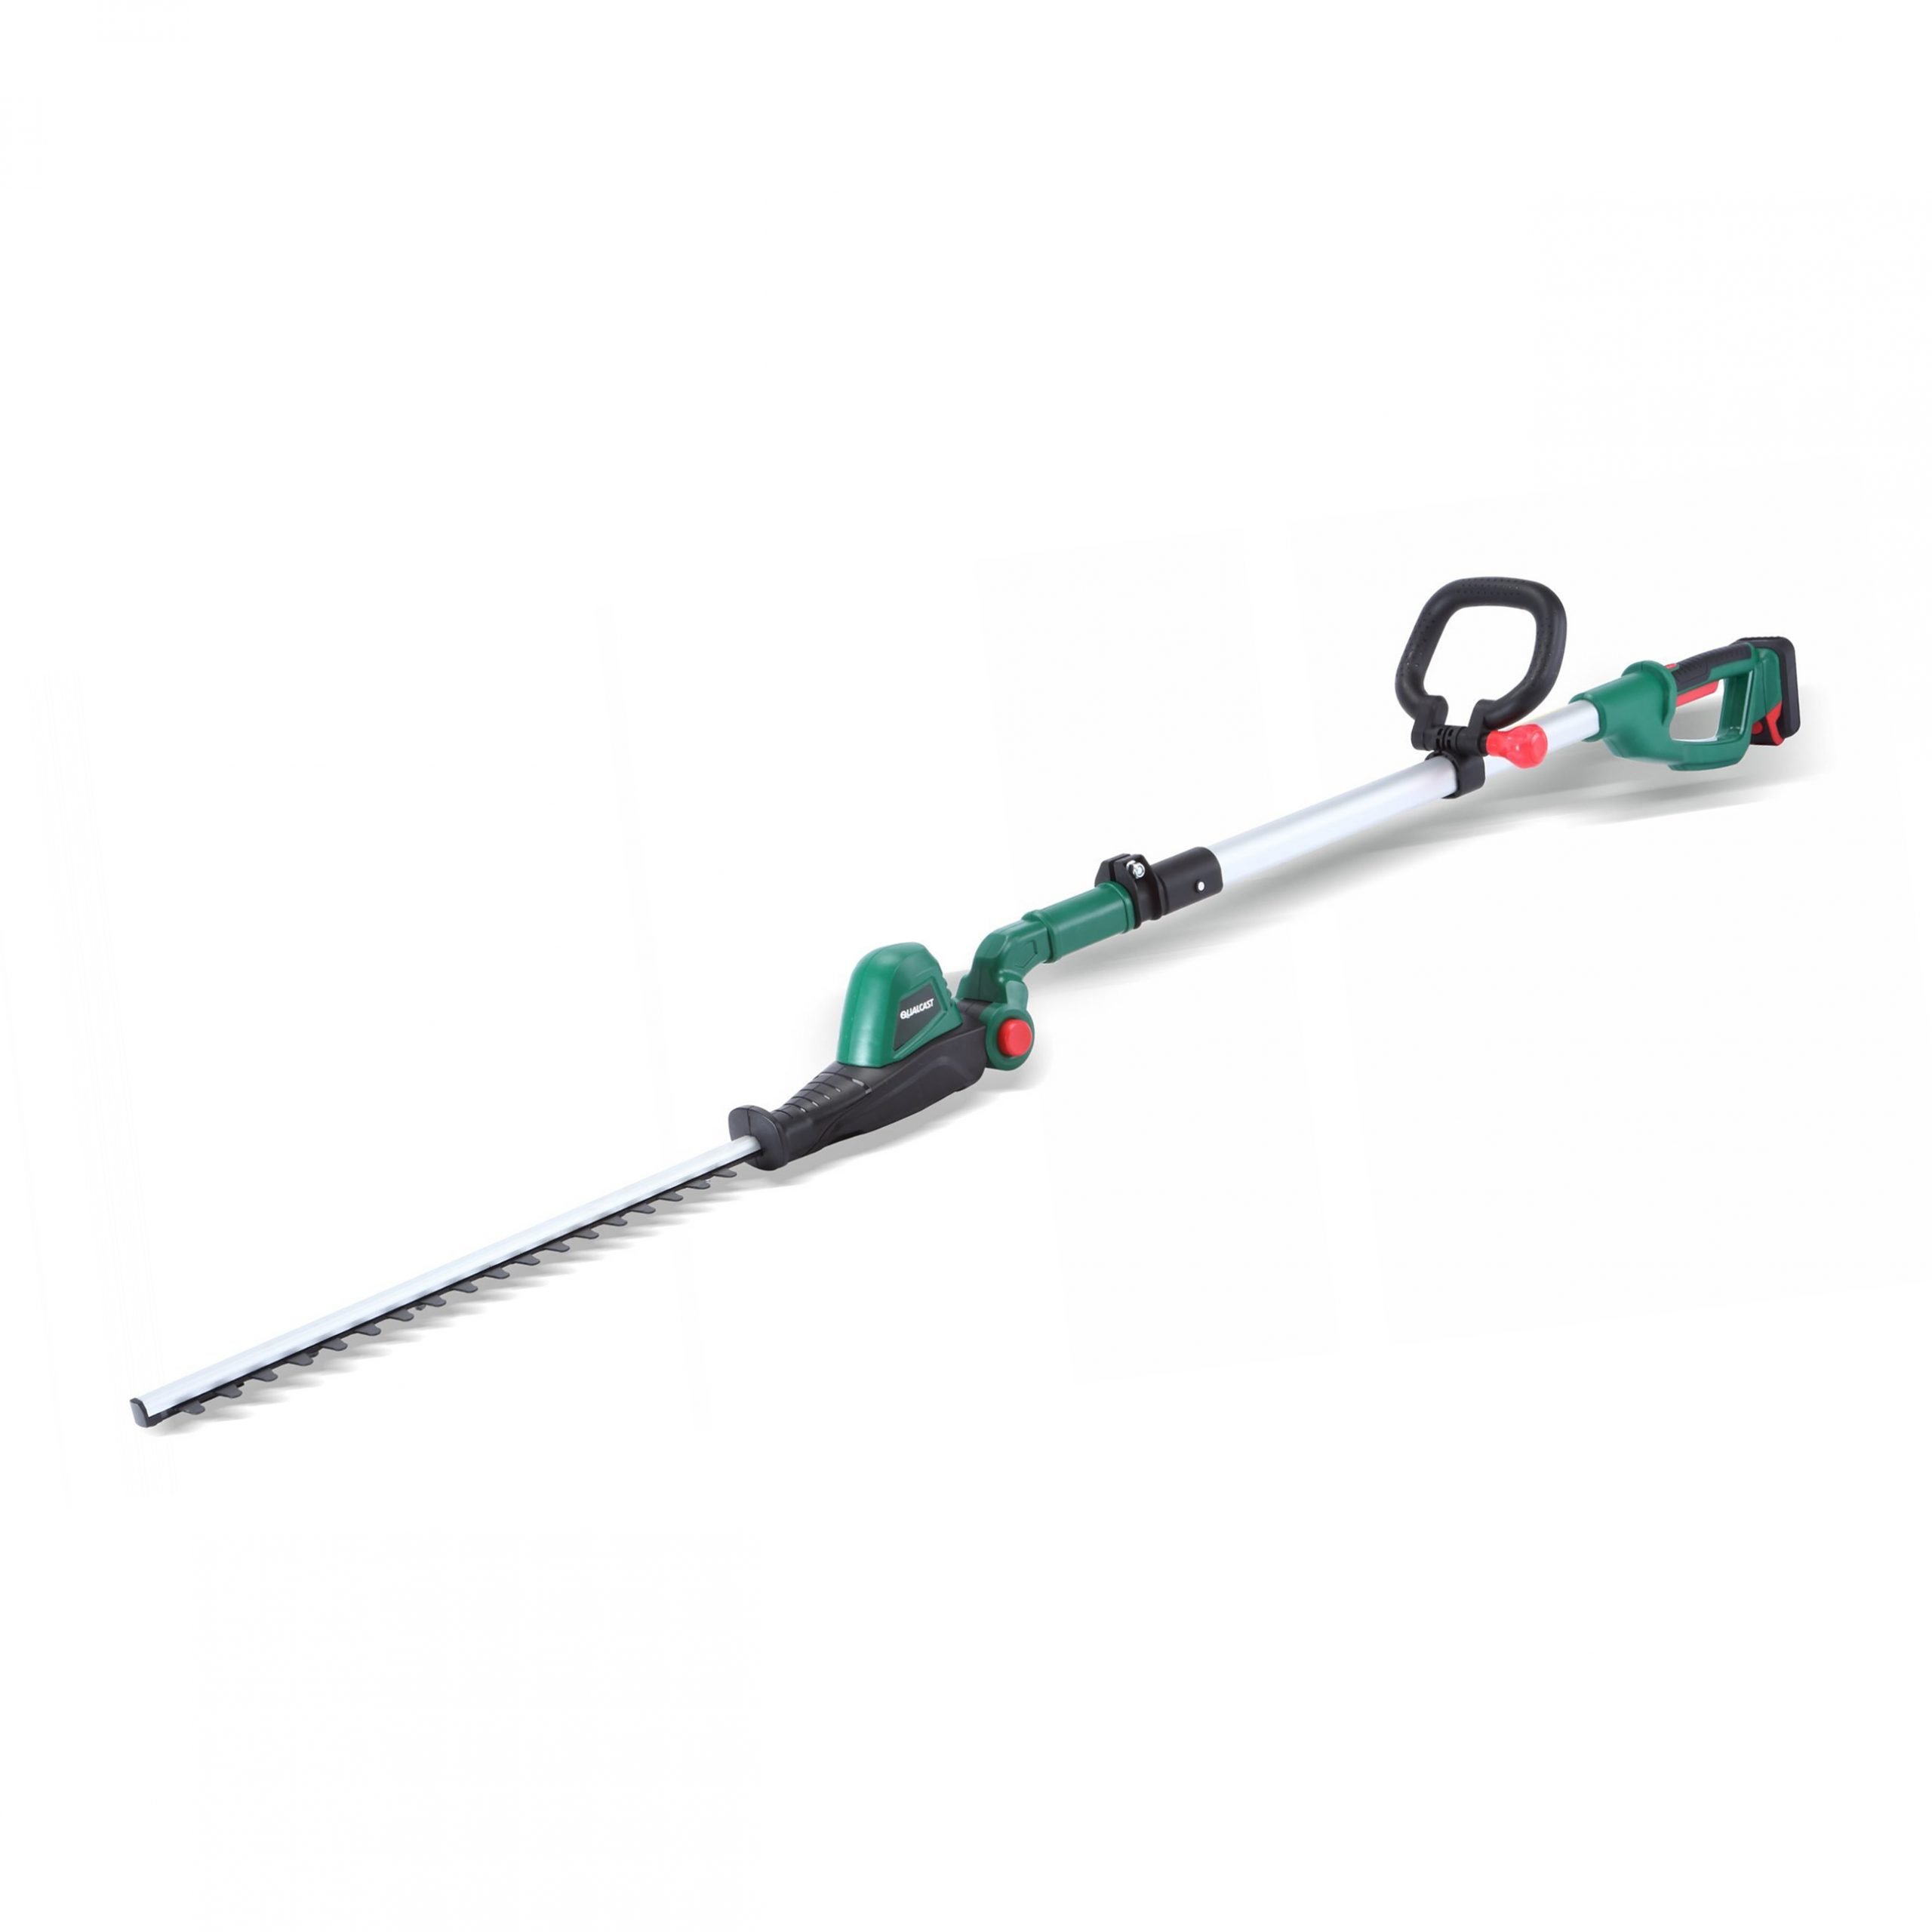 18v qualcast battery ABP118LZ strimmer hedge trimmer long reach pole cutter 